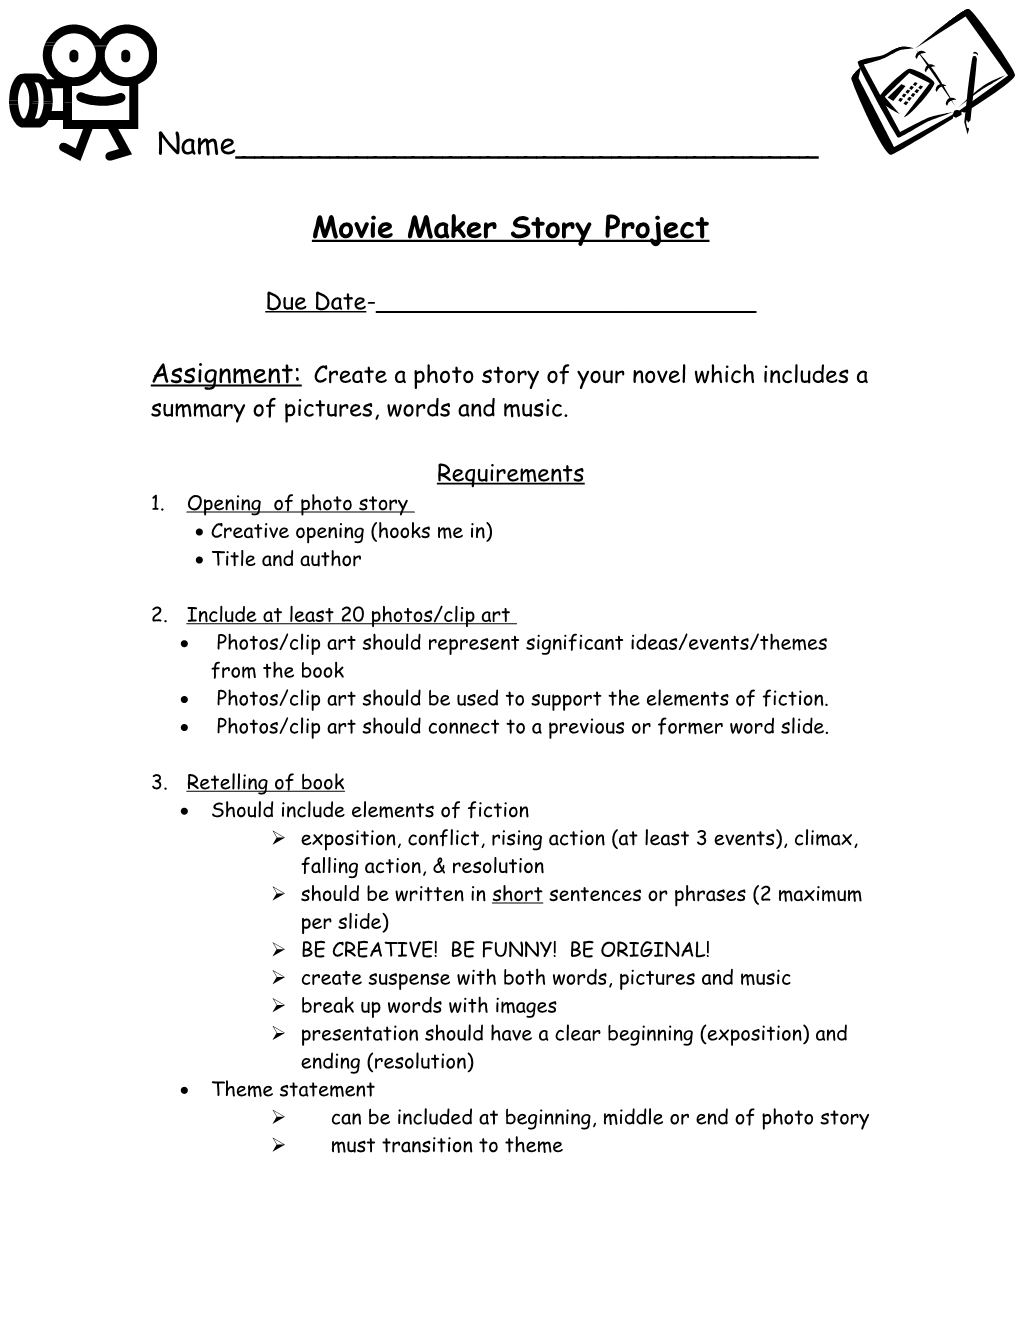 Movie Maker Story Project